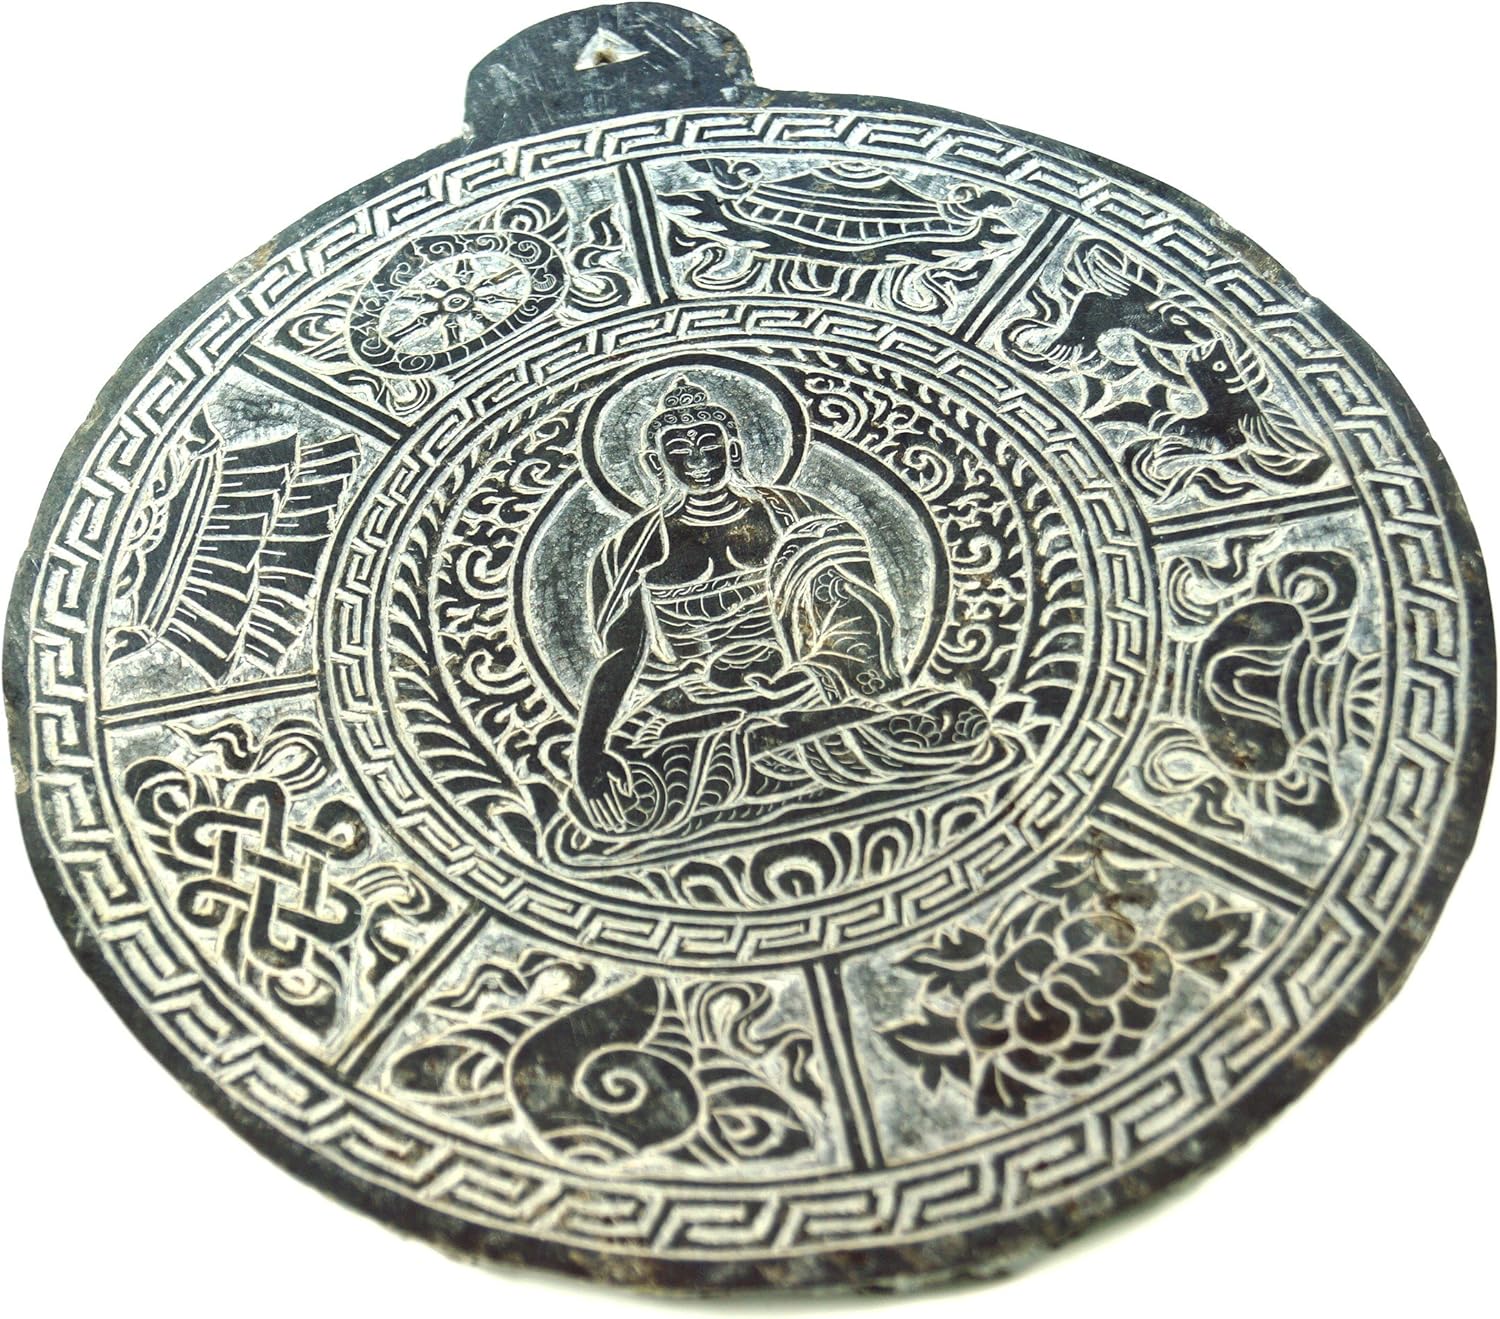 GURU SHOP Tibetan Stone Picture, Relief from Slate - Medicine Buddha 2, Grey, 27 x 1 cm, Buddha